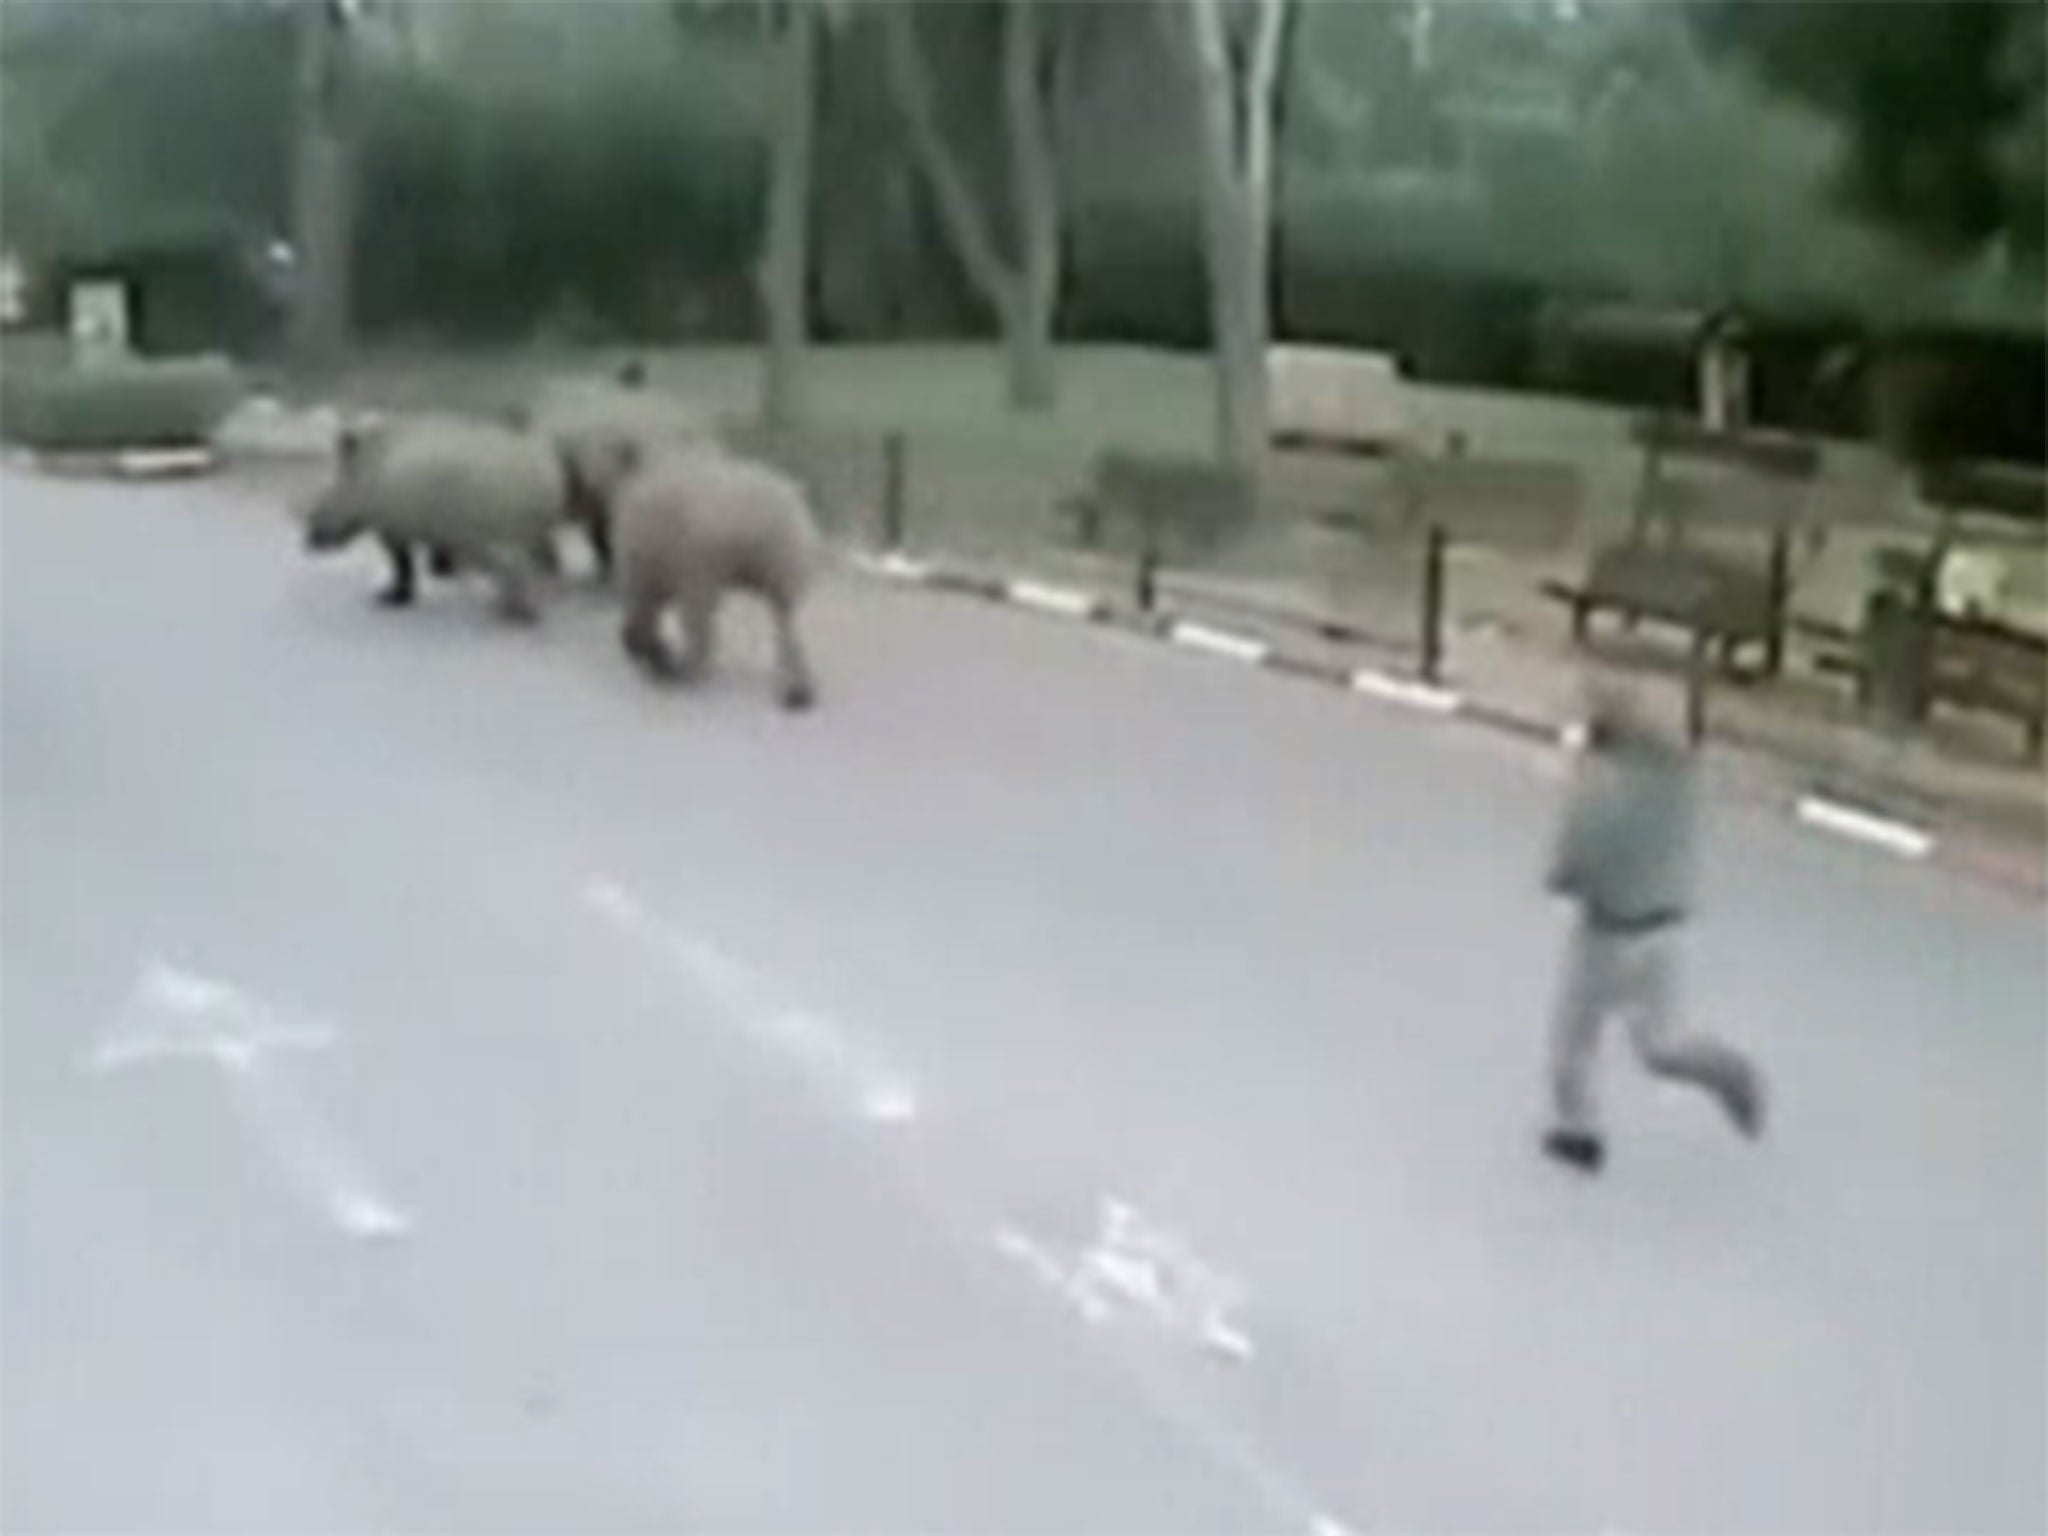 The three female rhinos escaping the safari park in Tel Aviv